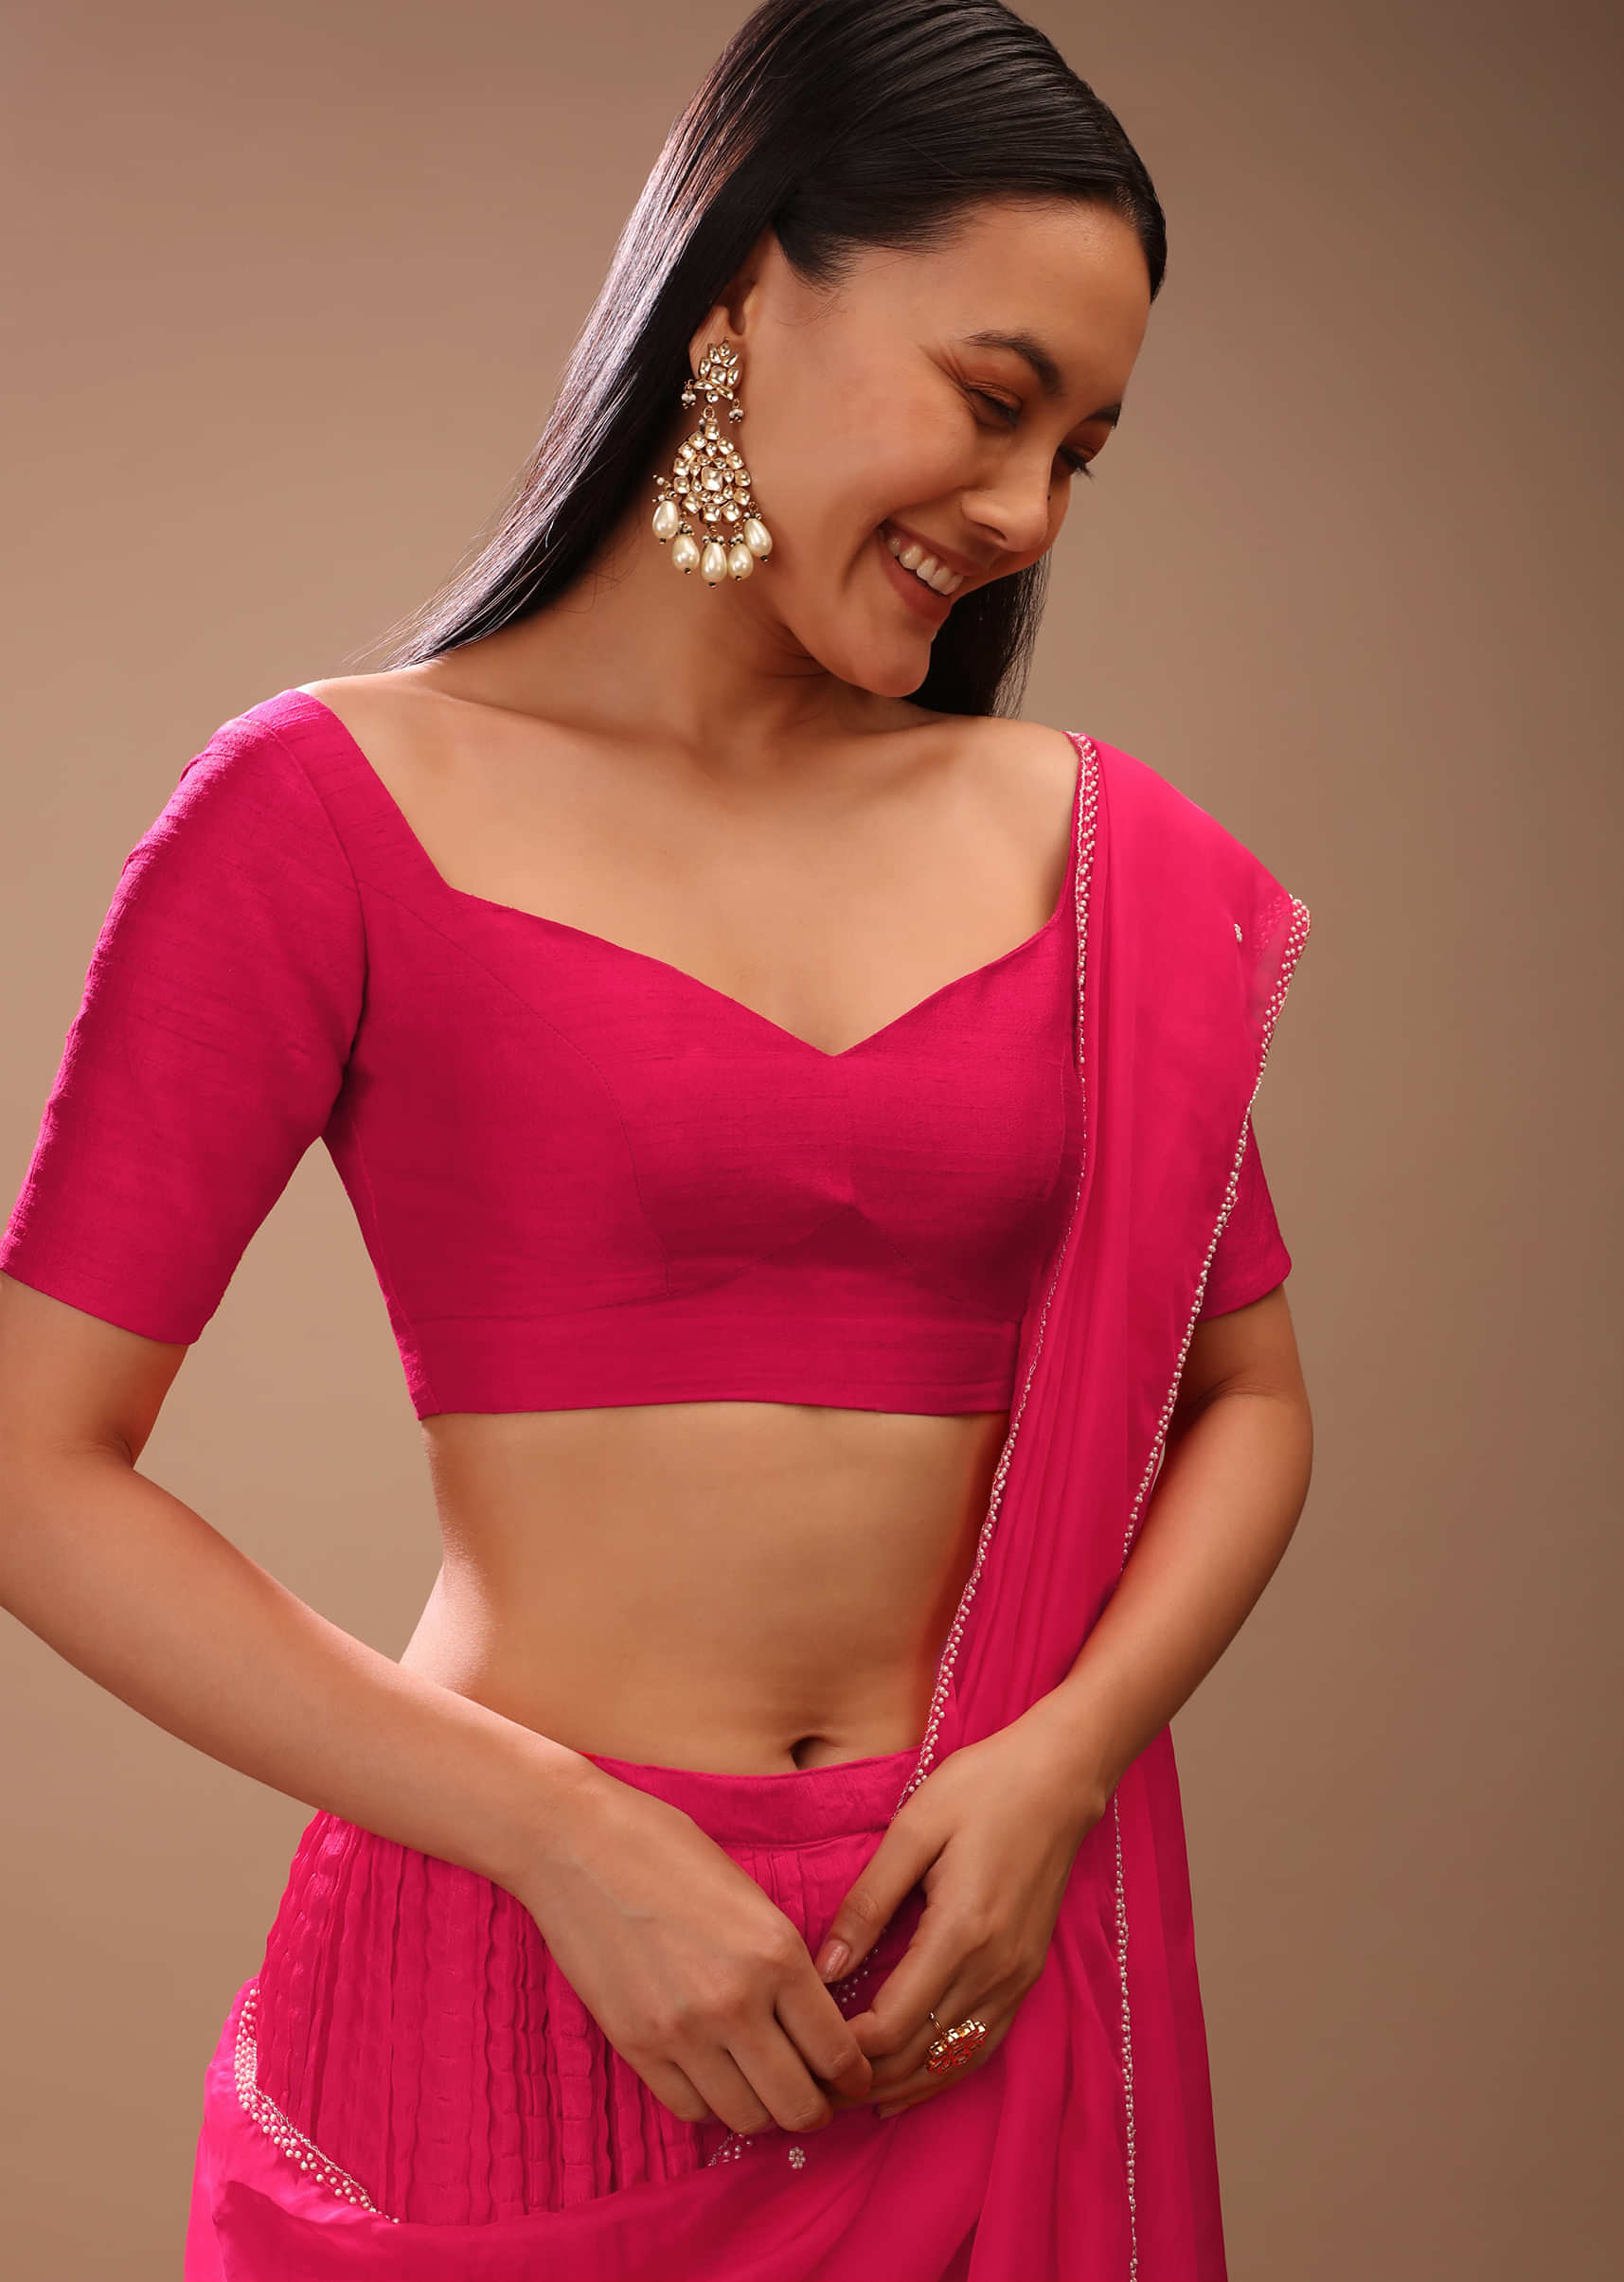 Readymade Saree Blouse : Buy Readymade Saree Blouse for Women